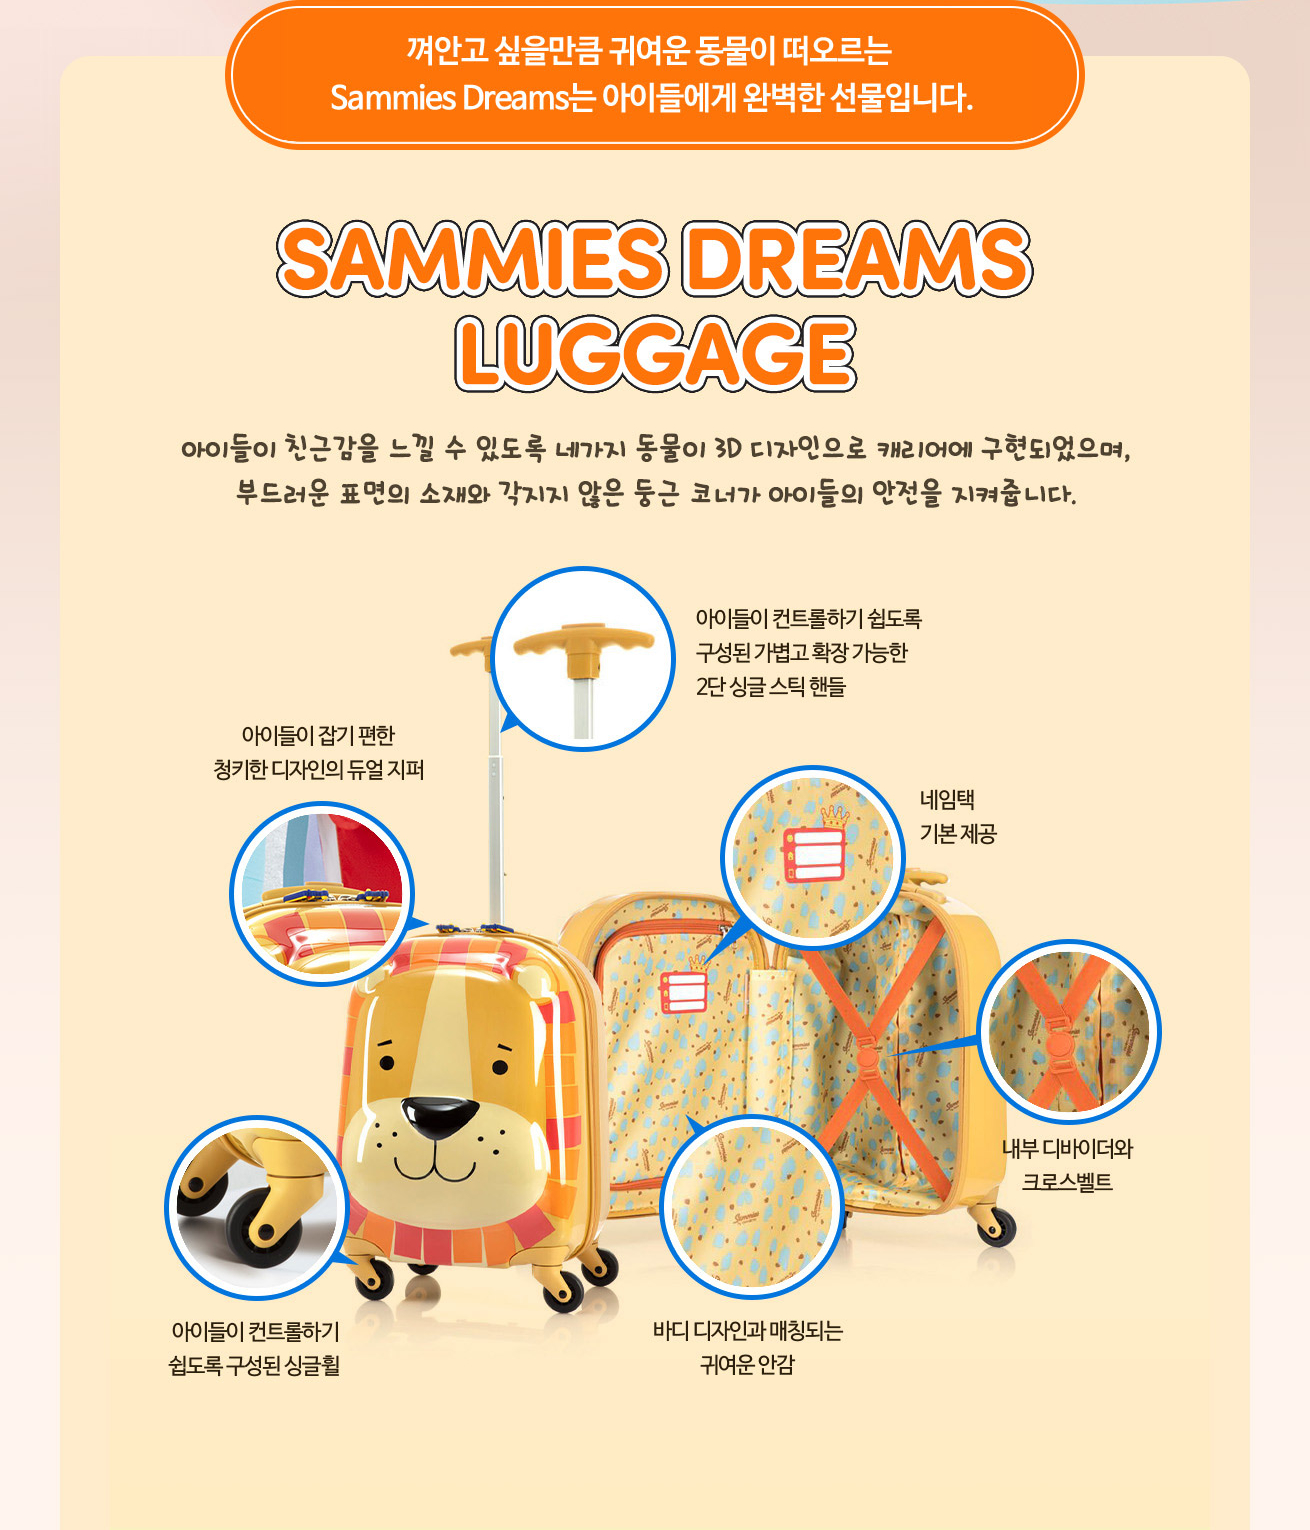 SAMMIES DREAMS LUGGAGE